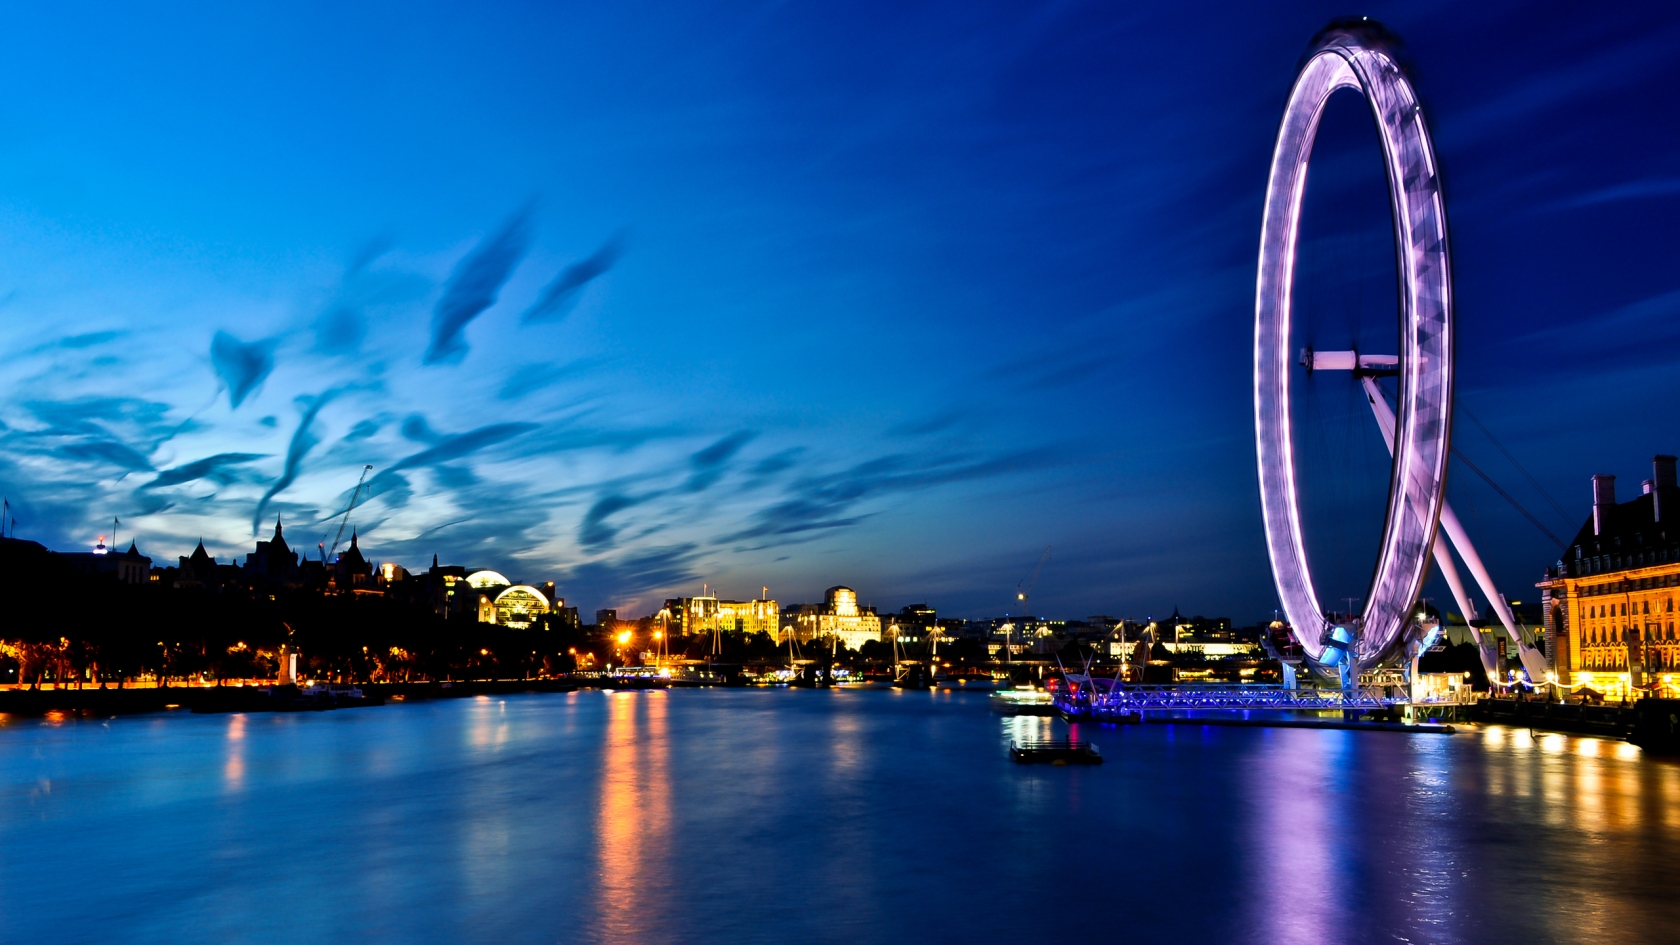 London Eye View for 1680 x 945 HDTV resolution